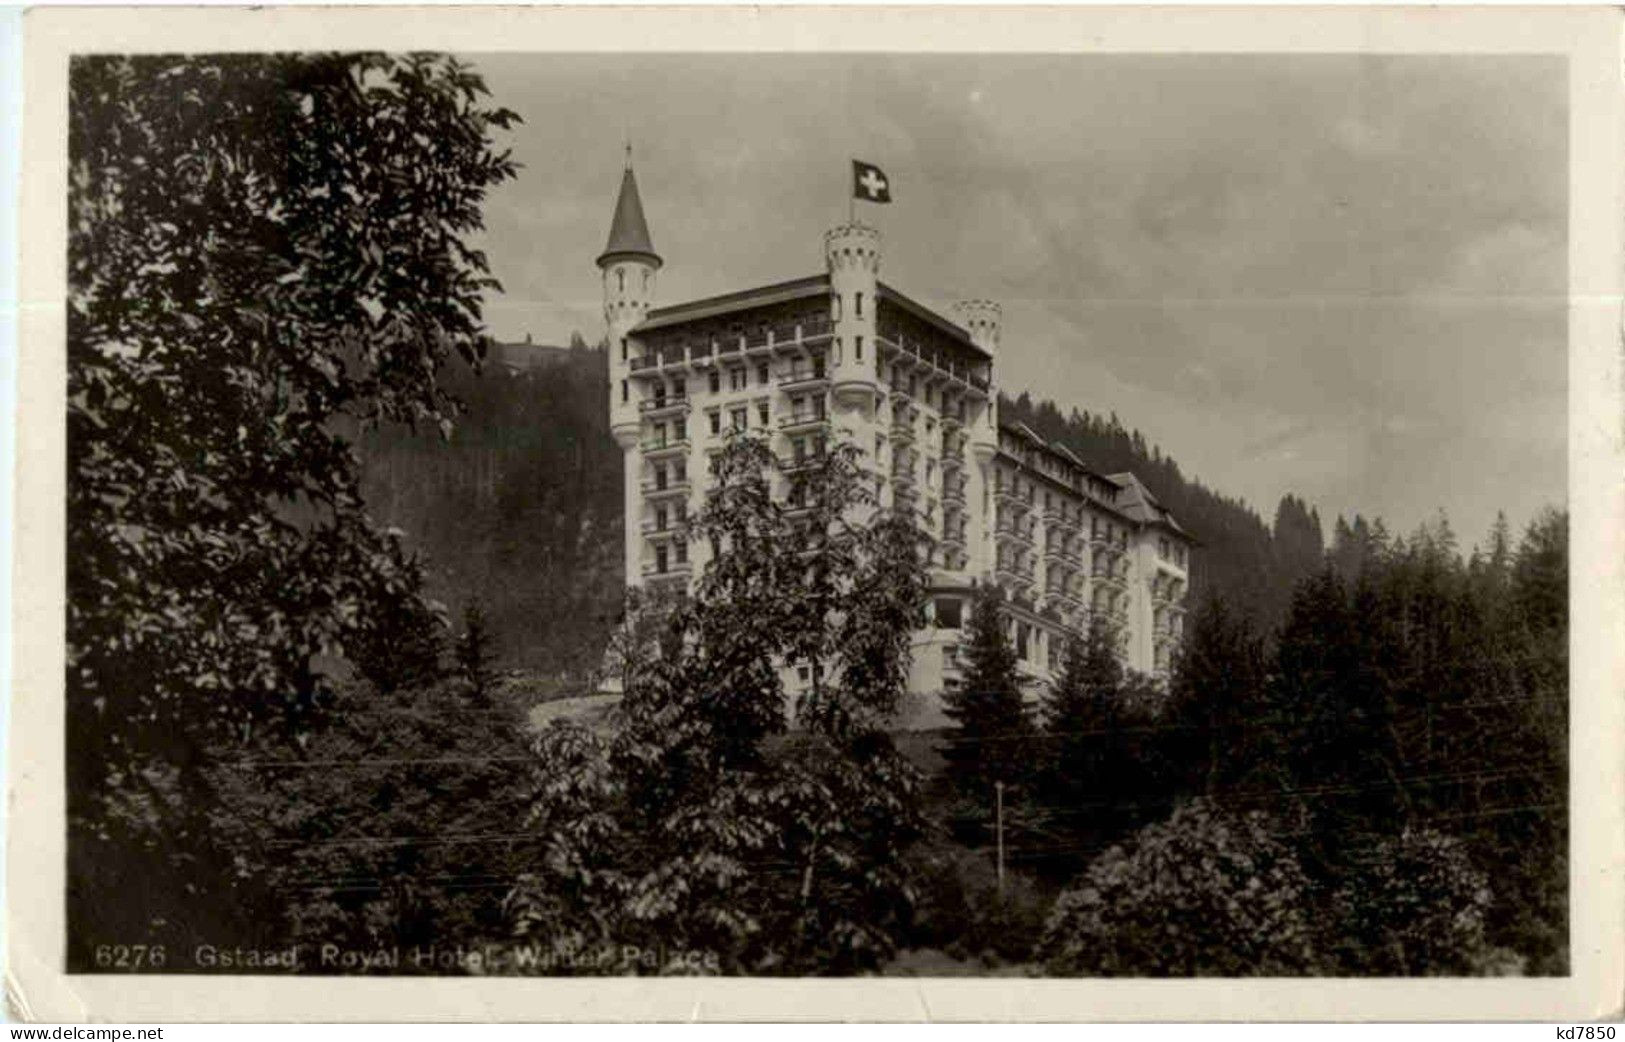 Gstaad - Royal Hotel - Gstaad